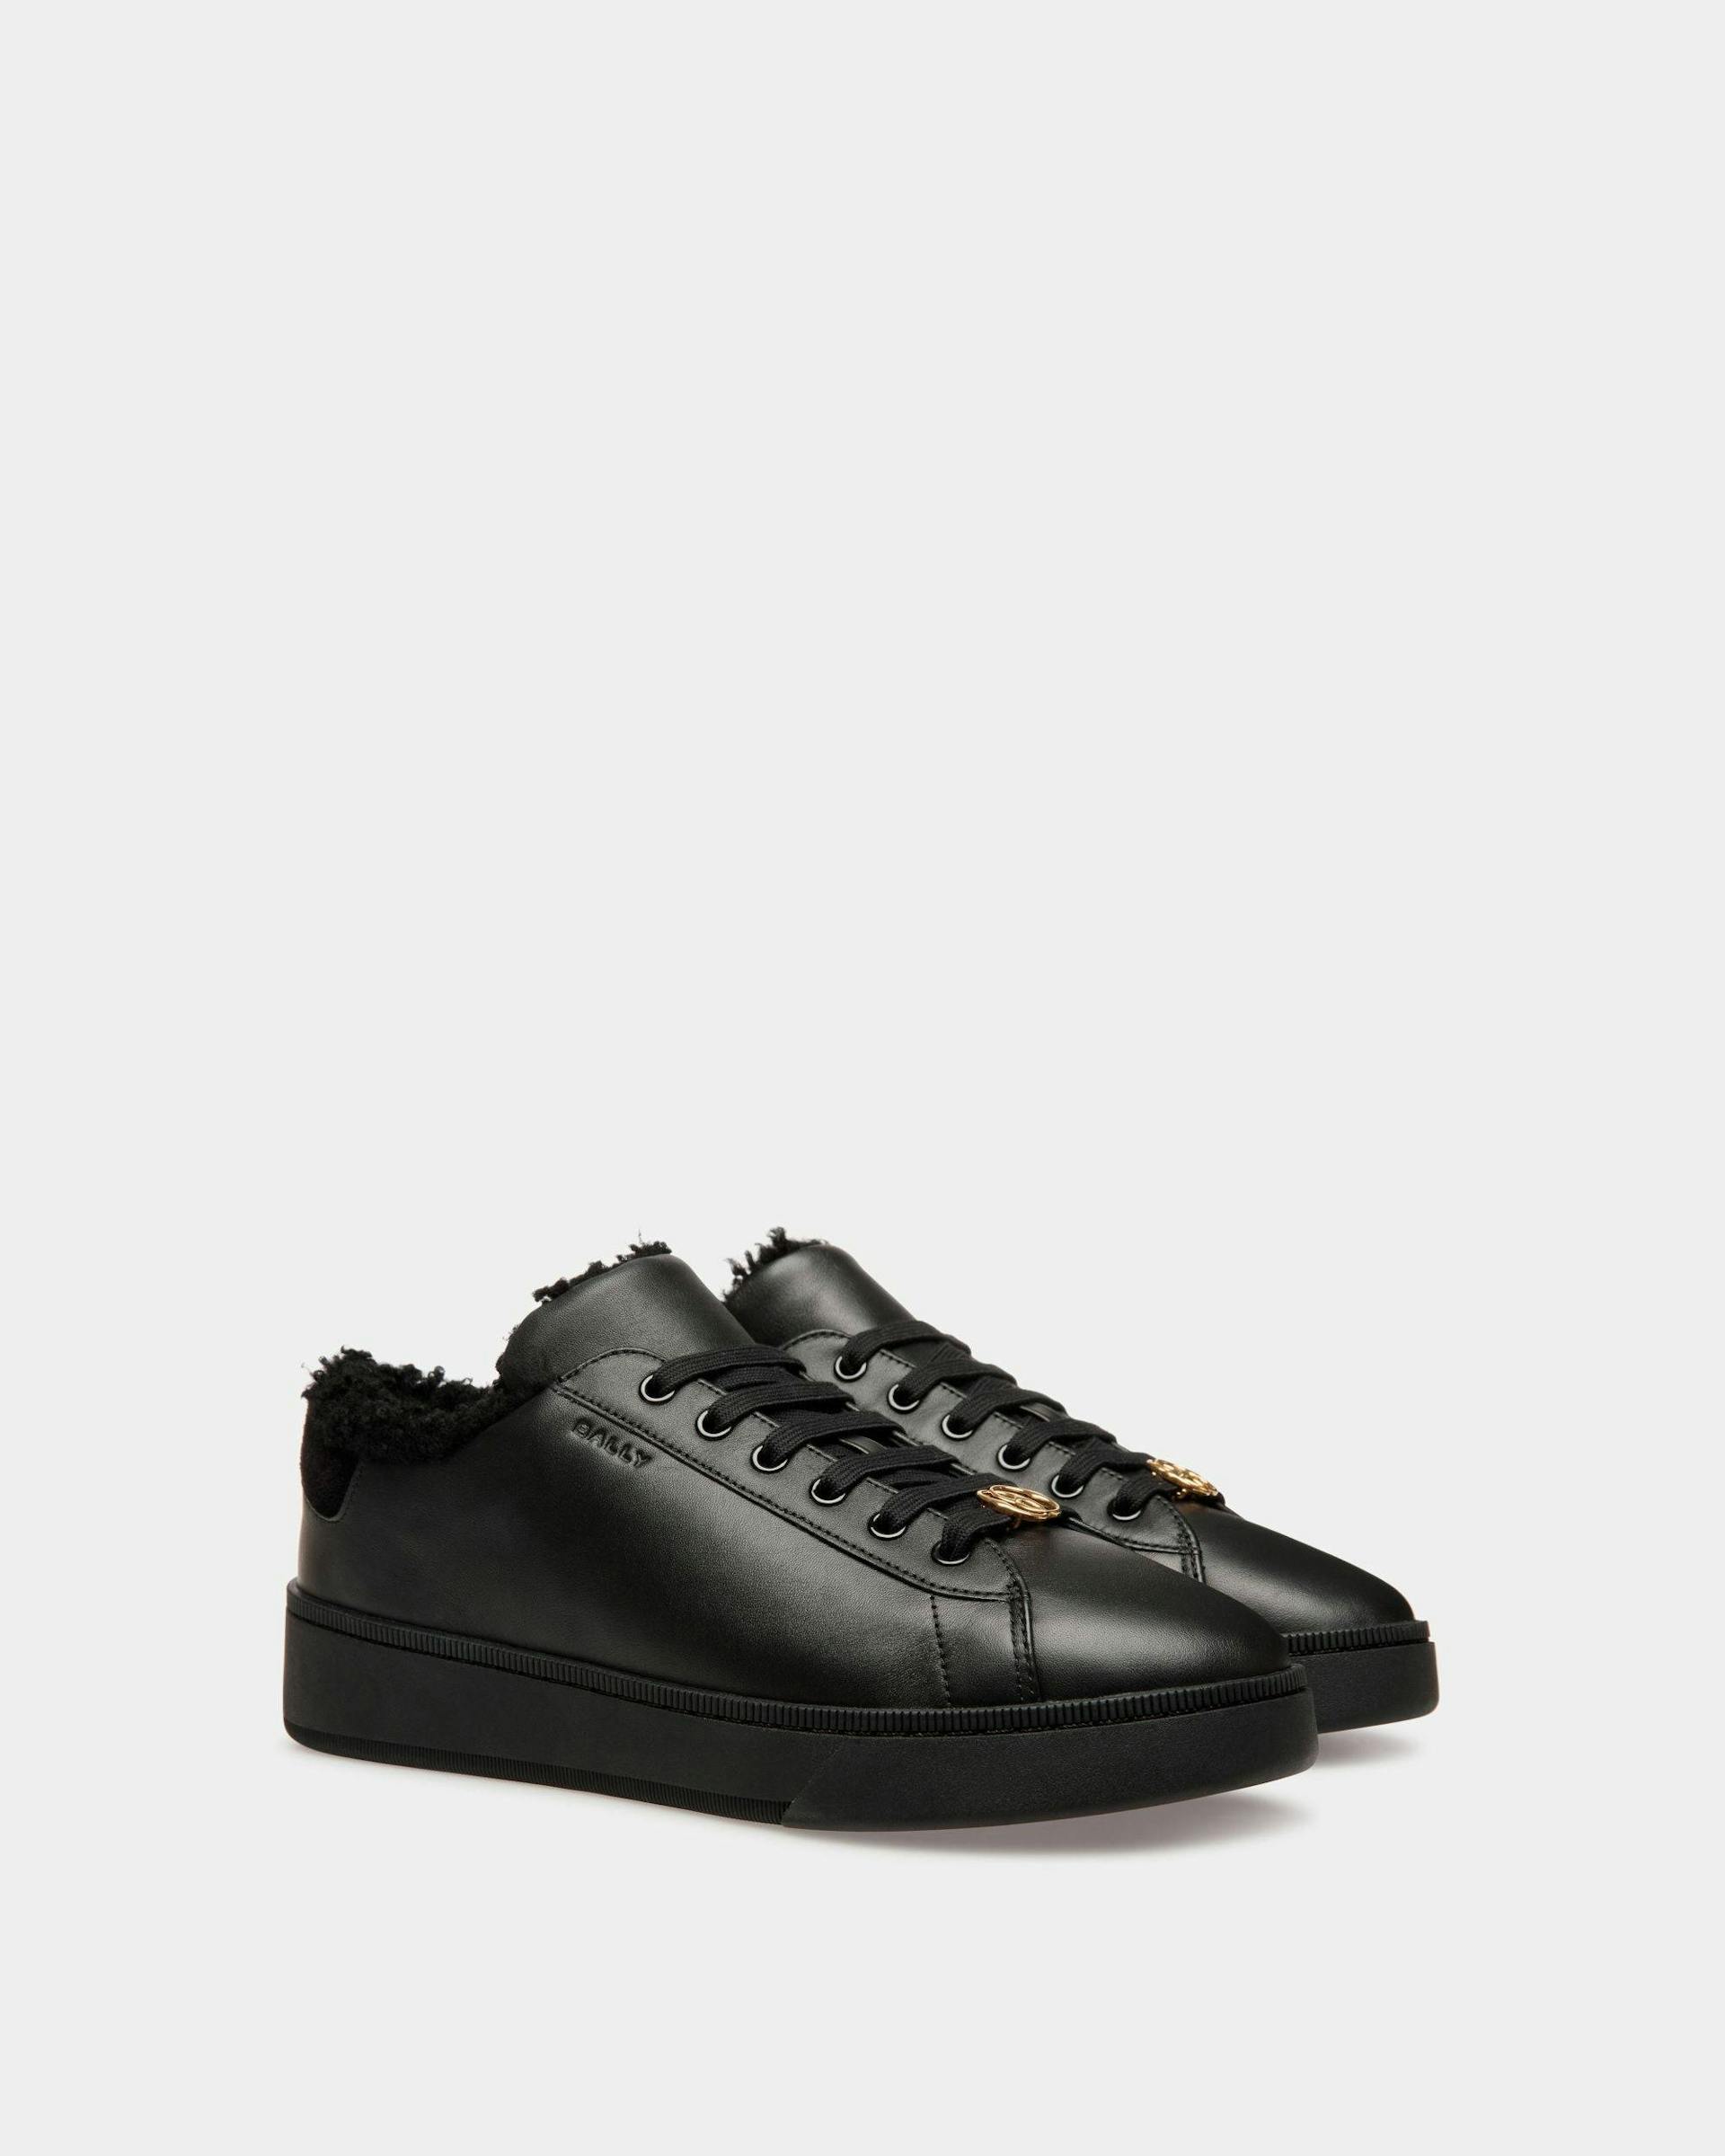 Raise Sneakers In Black Leather - Men's - Bally - 03